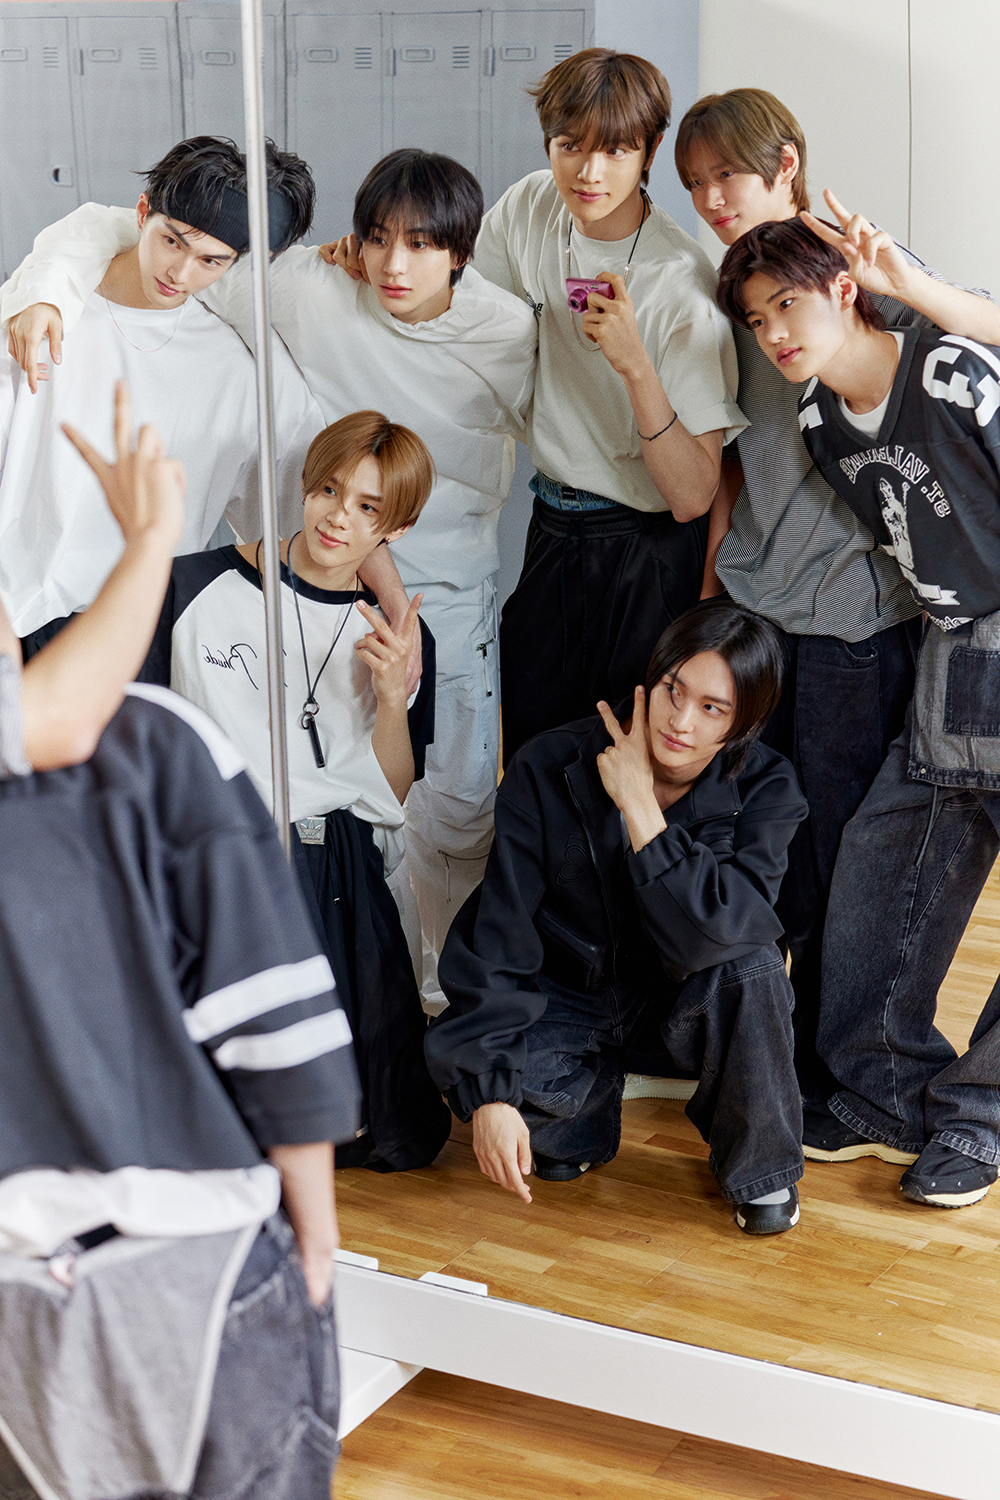 SM Entertainment's new boy band Riize (SM Entertainment)